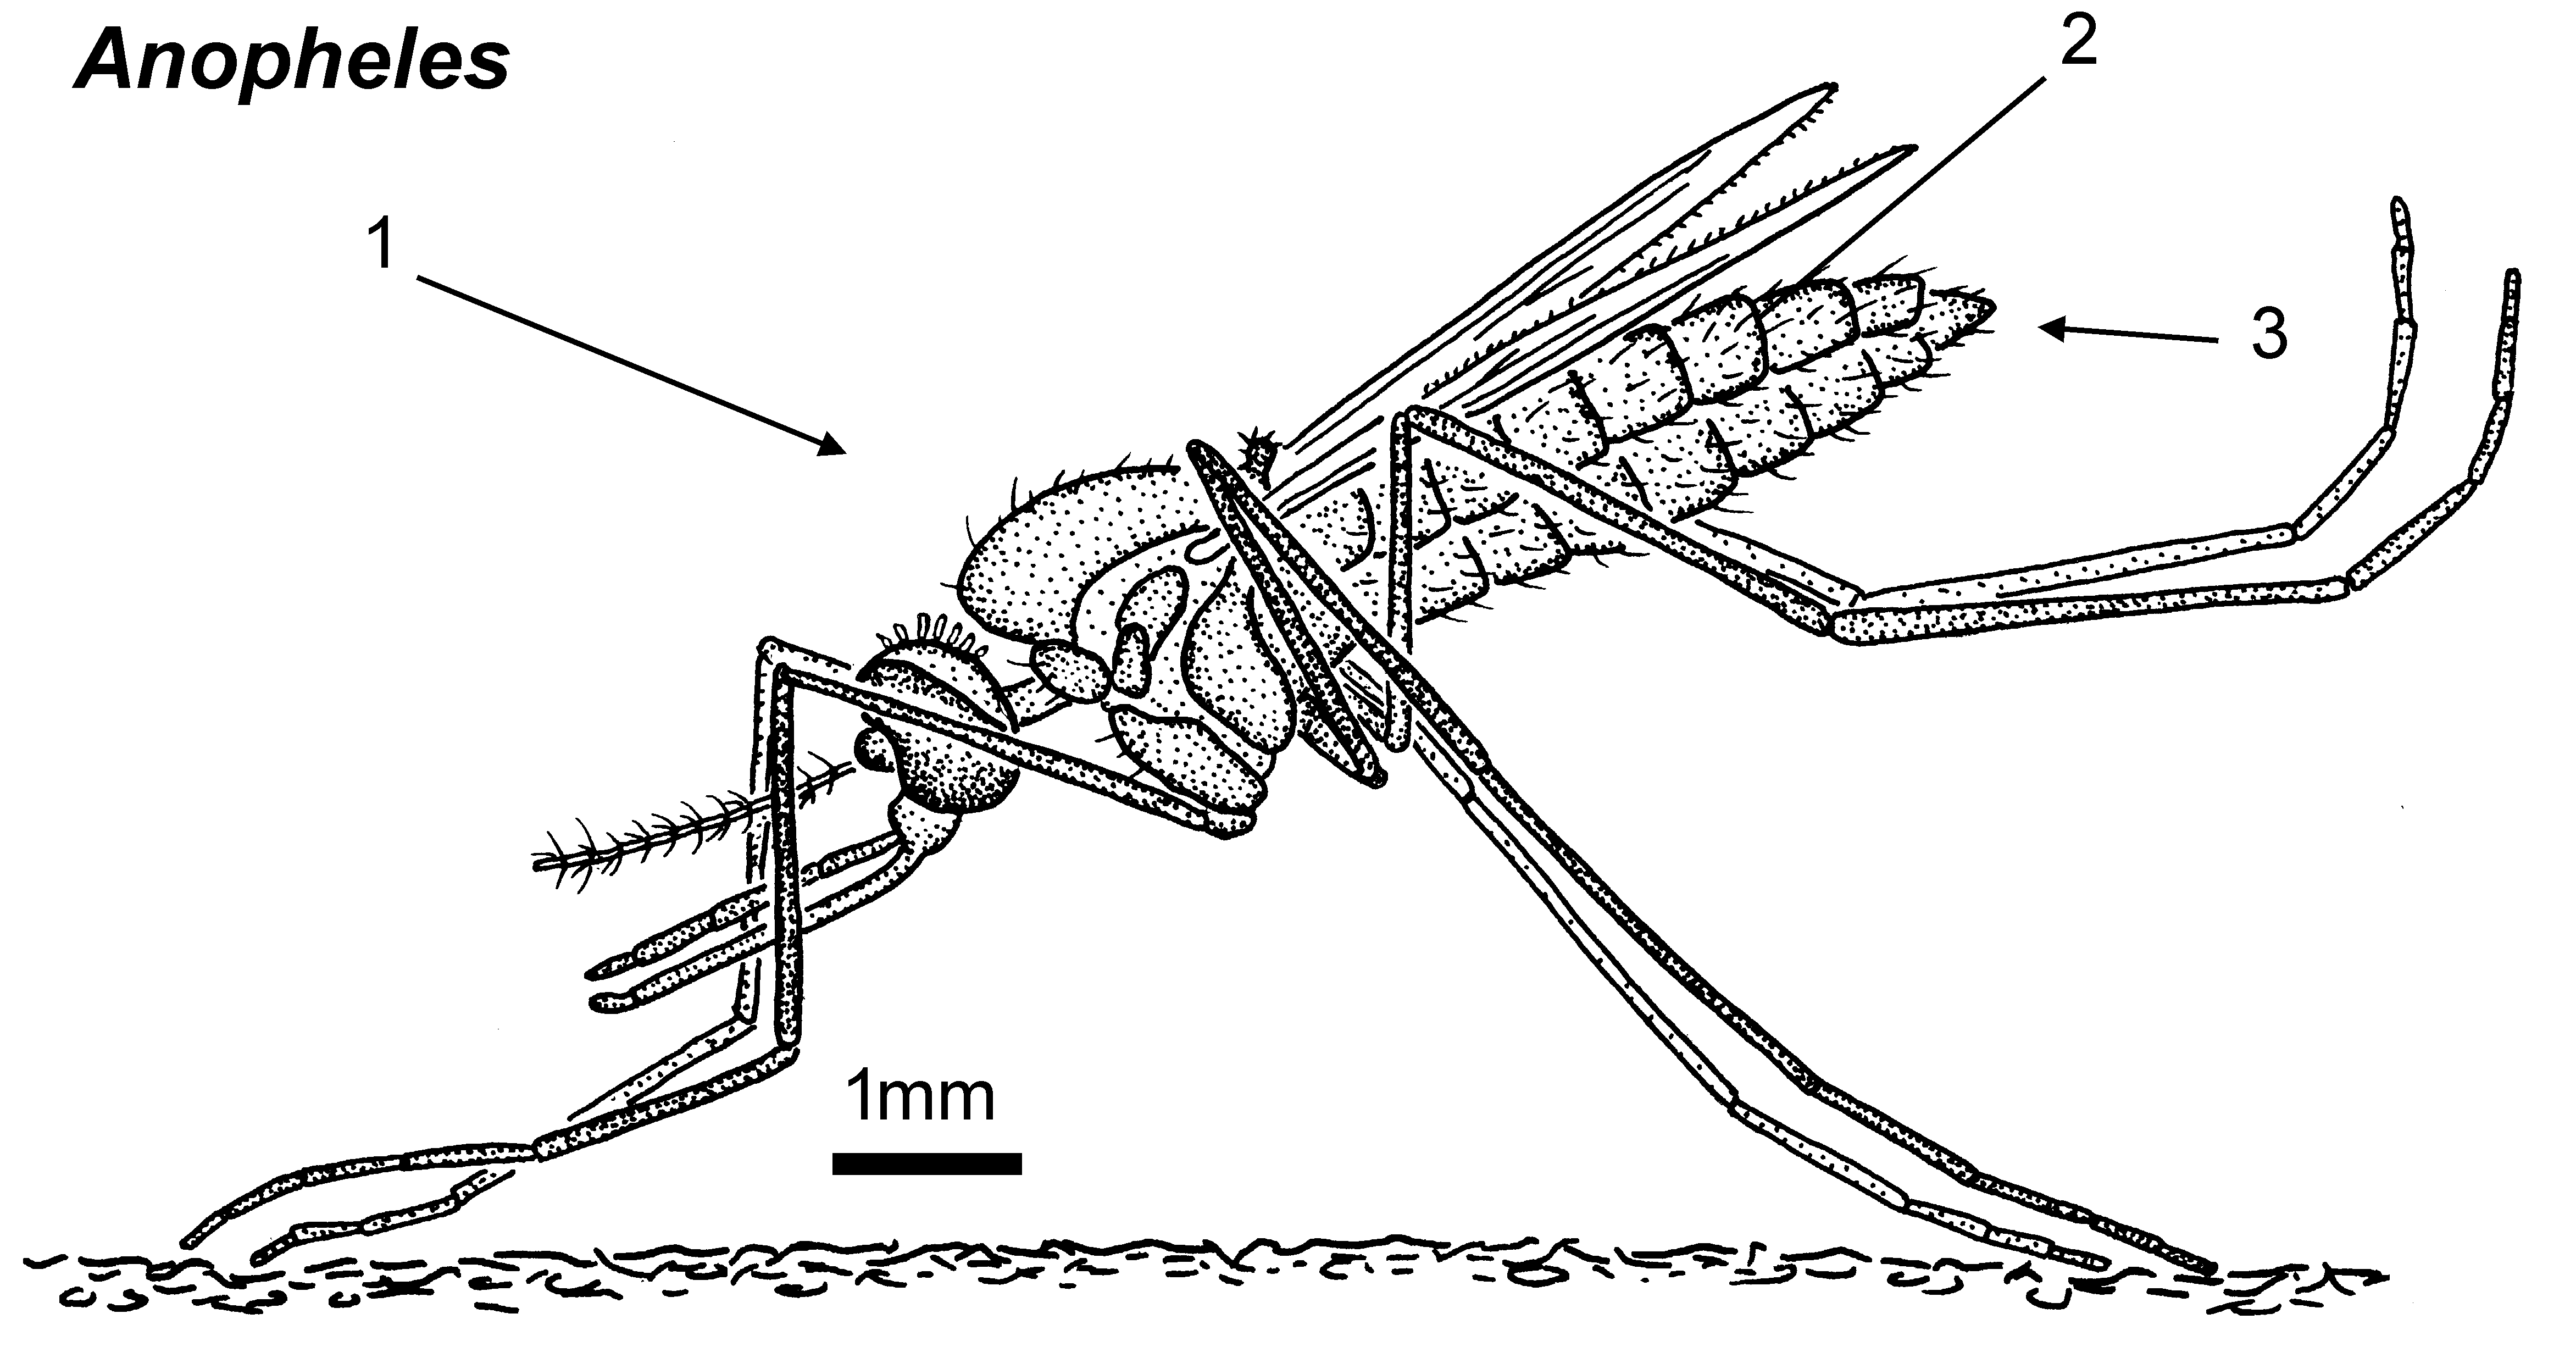  Anopheles mosquito